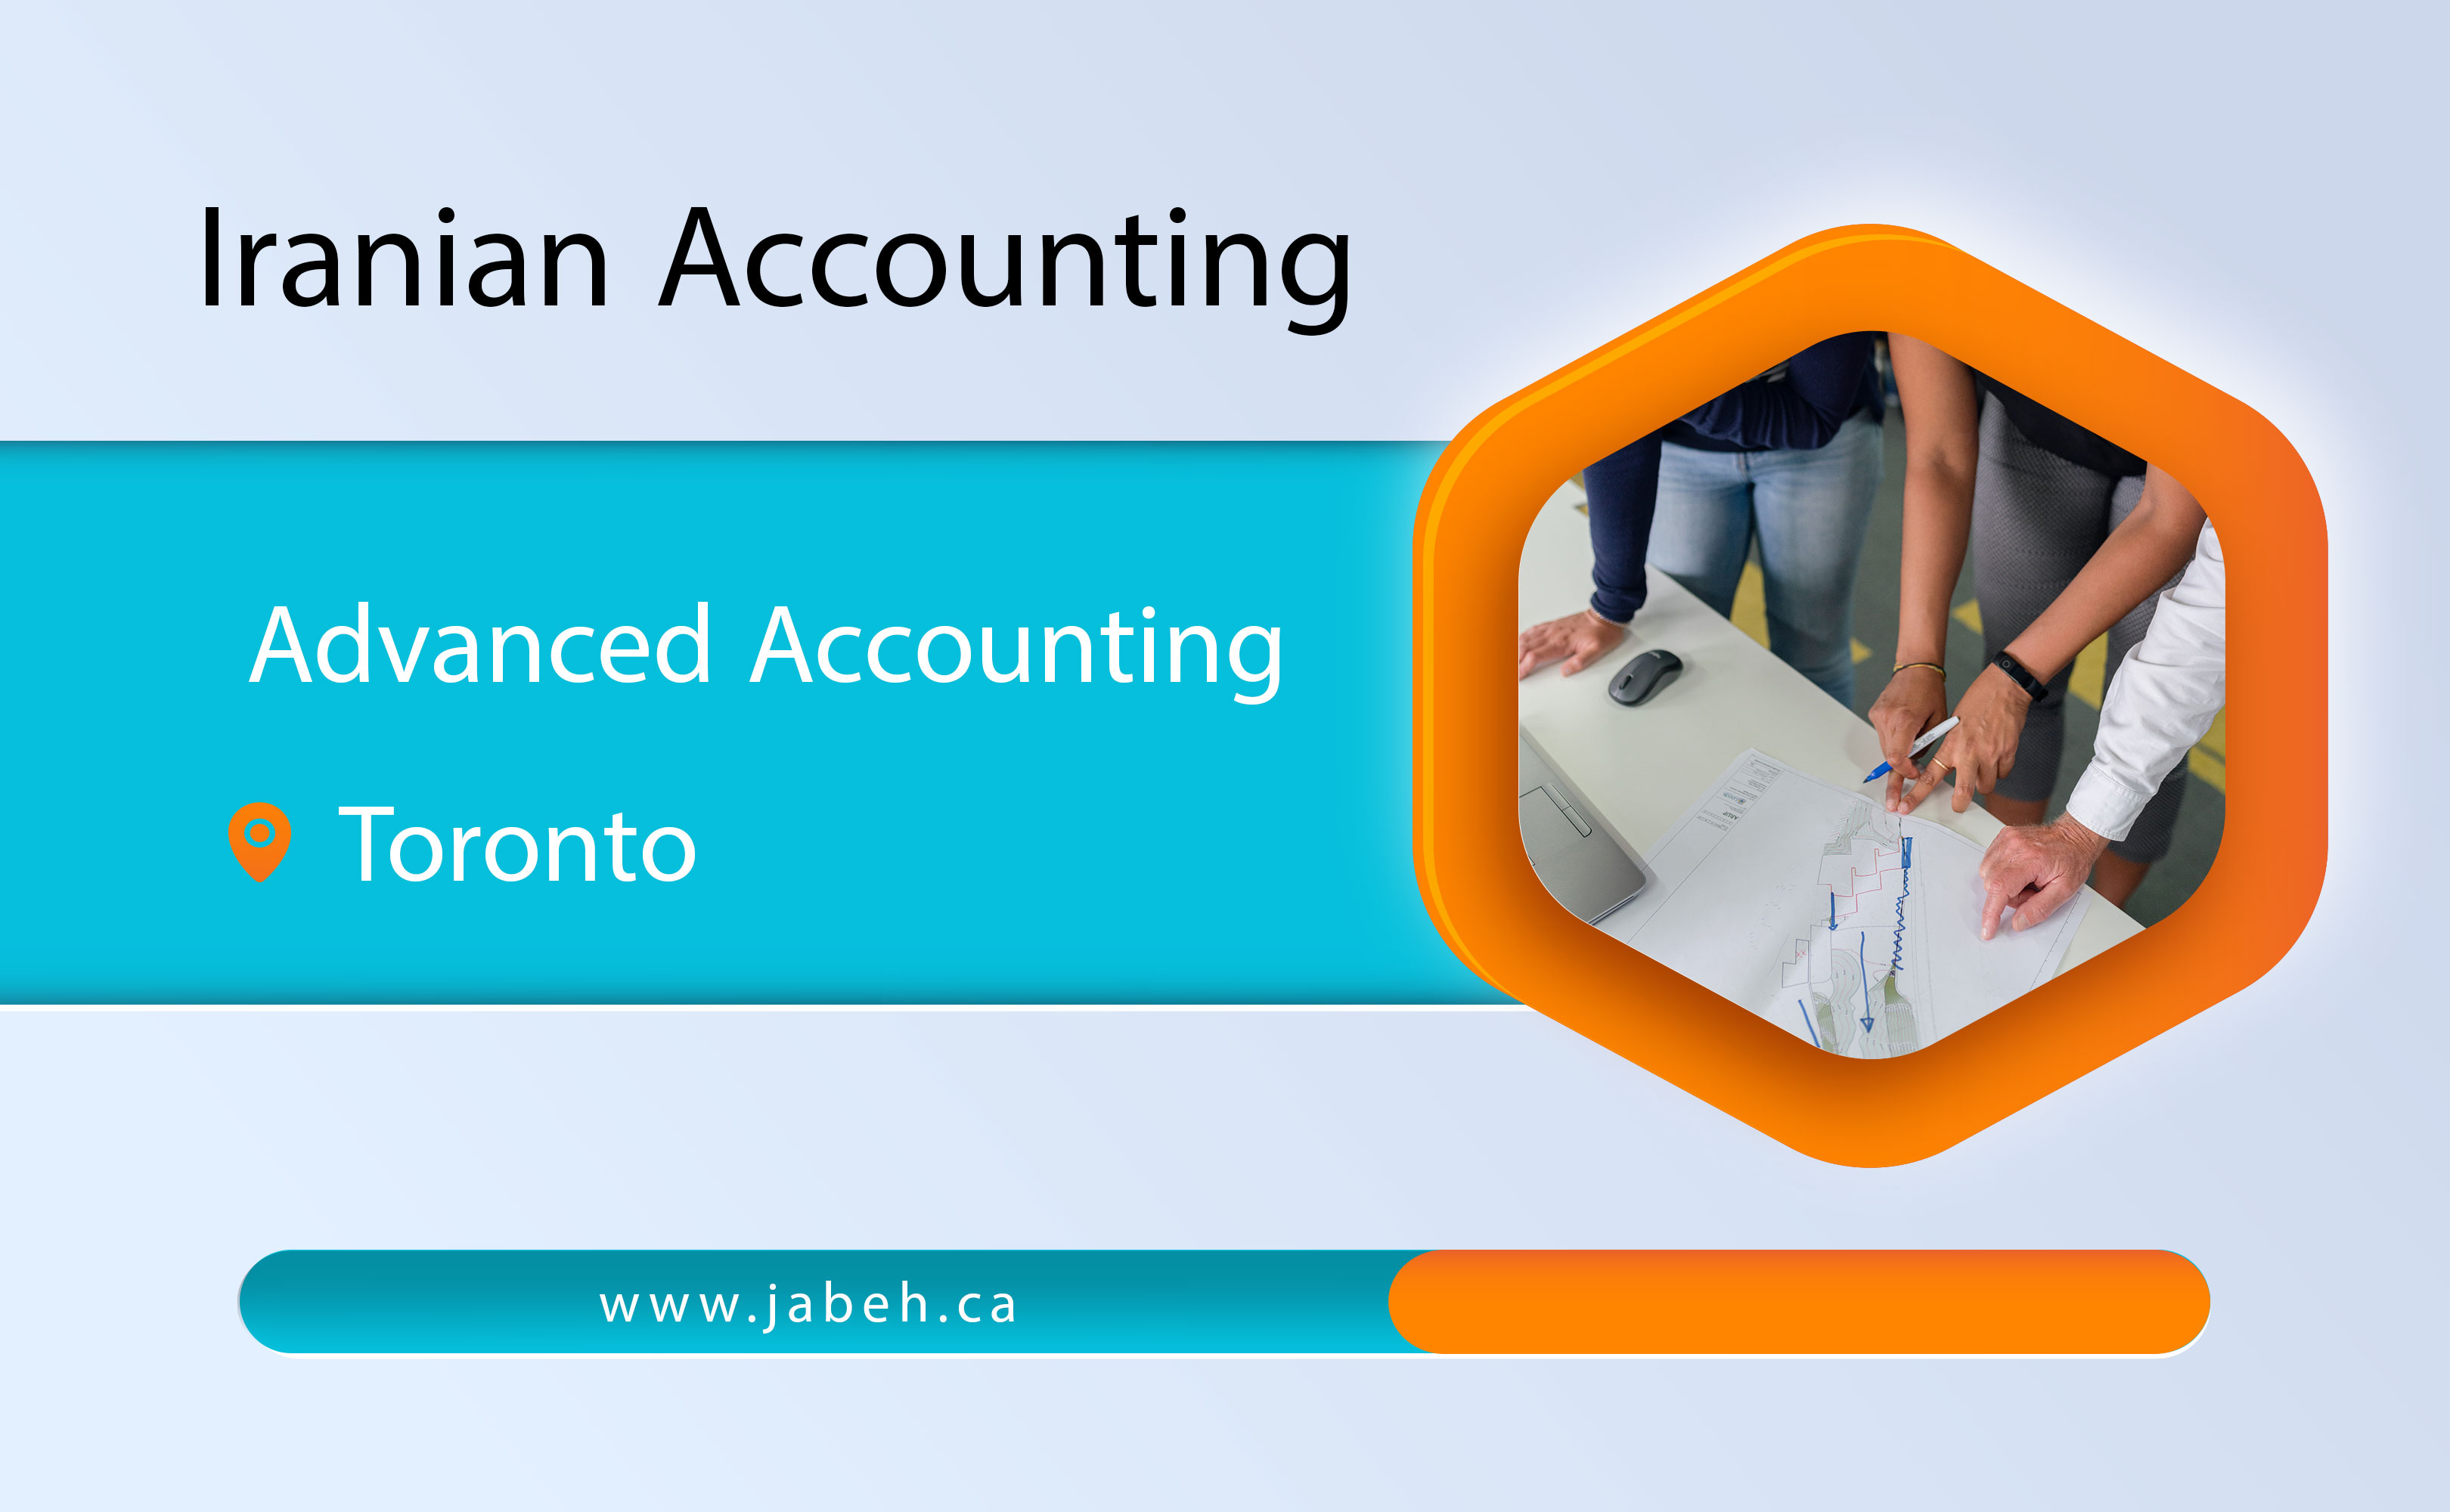 Iranian advanced accounting company in Toronto